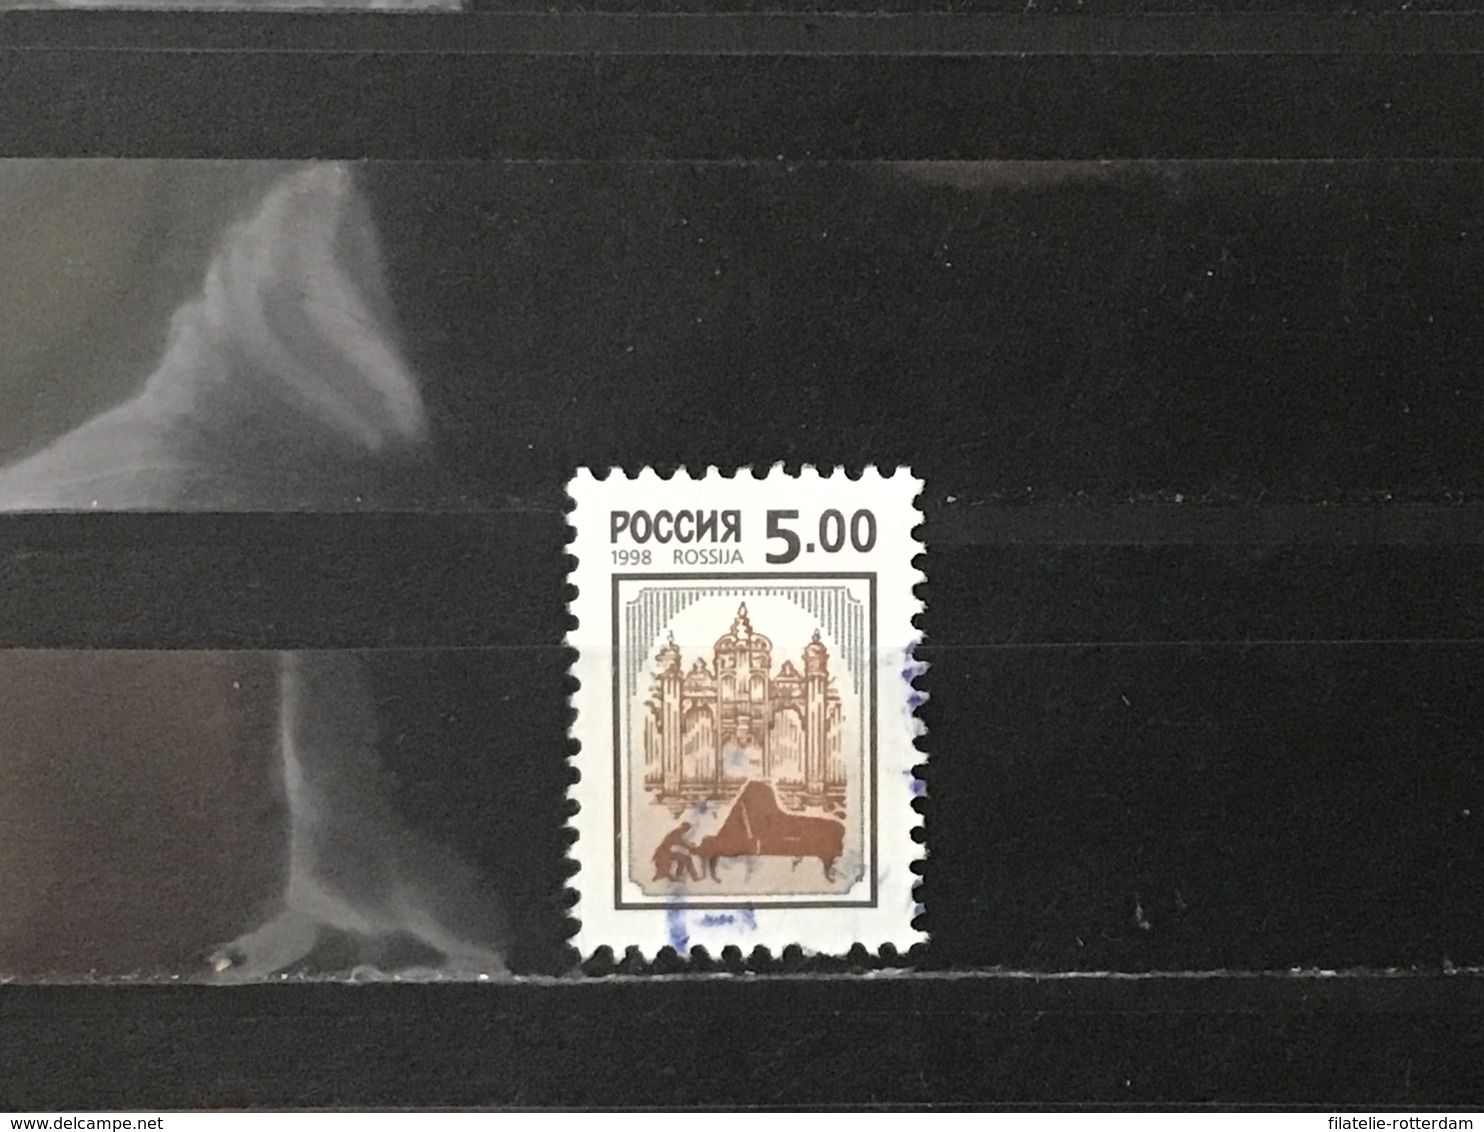 Rusland / Russia - Symbolen (5) 1998 - Used Stamps